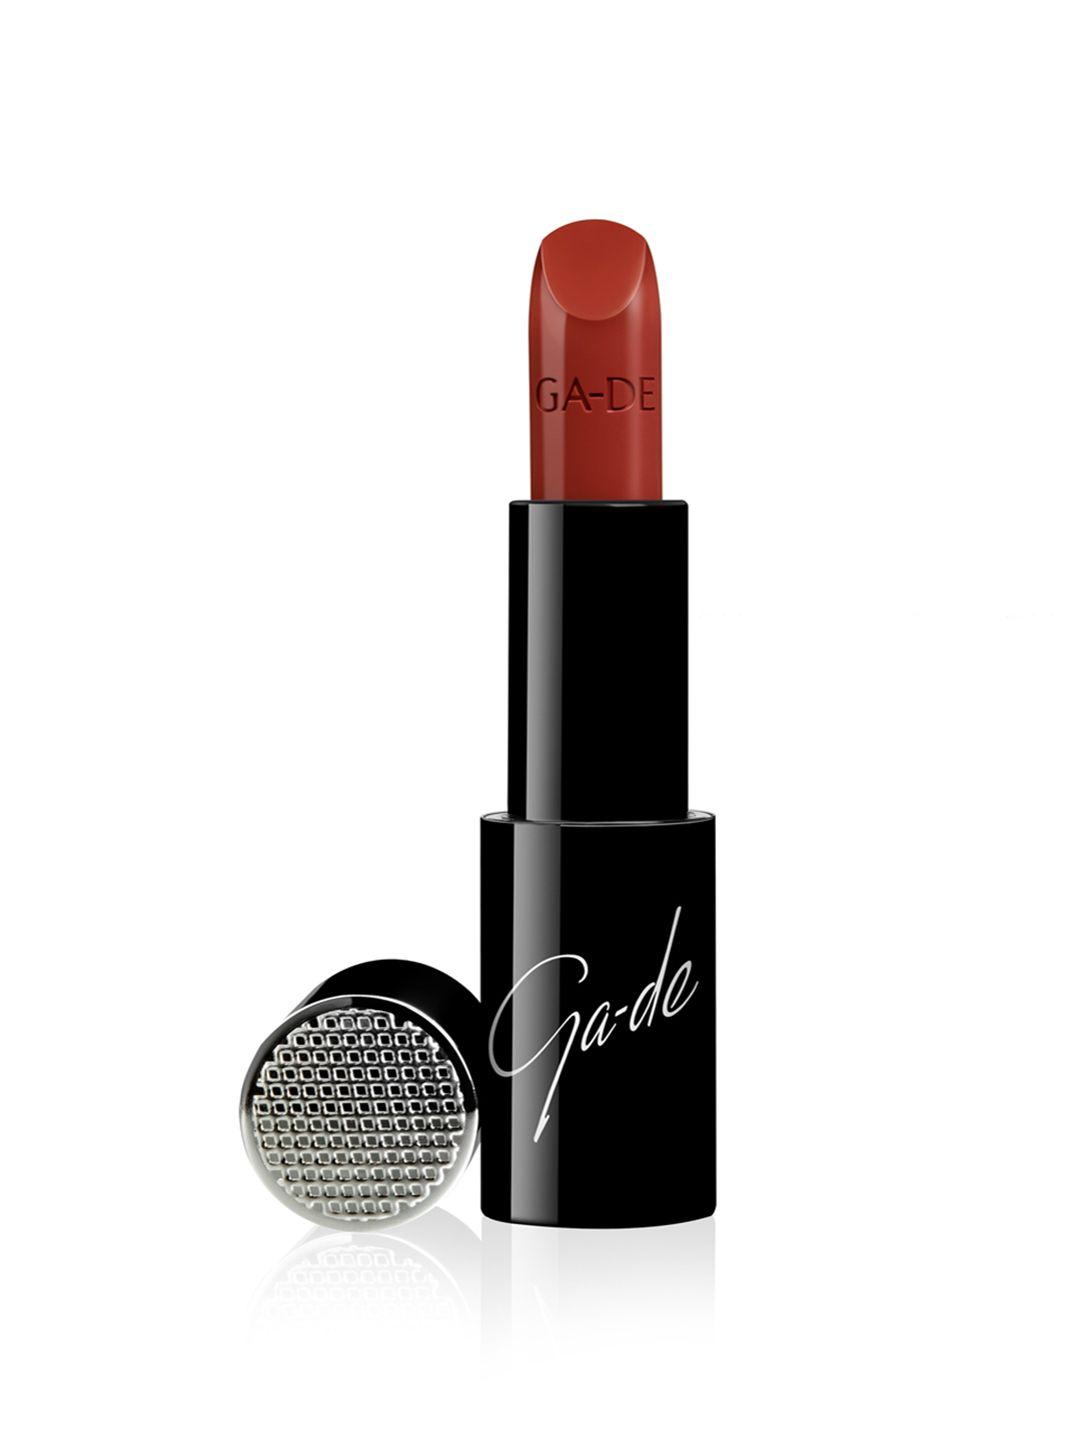 ga-de selfie luminous full-cover creamy lipstick with argan oil - delhi 869